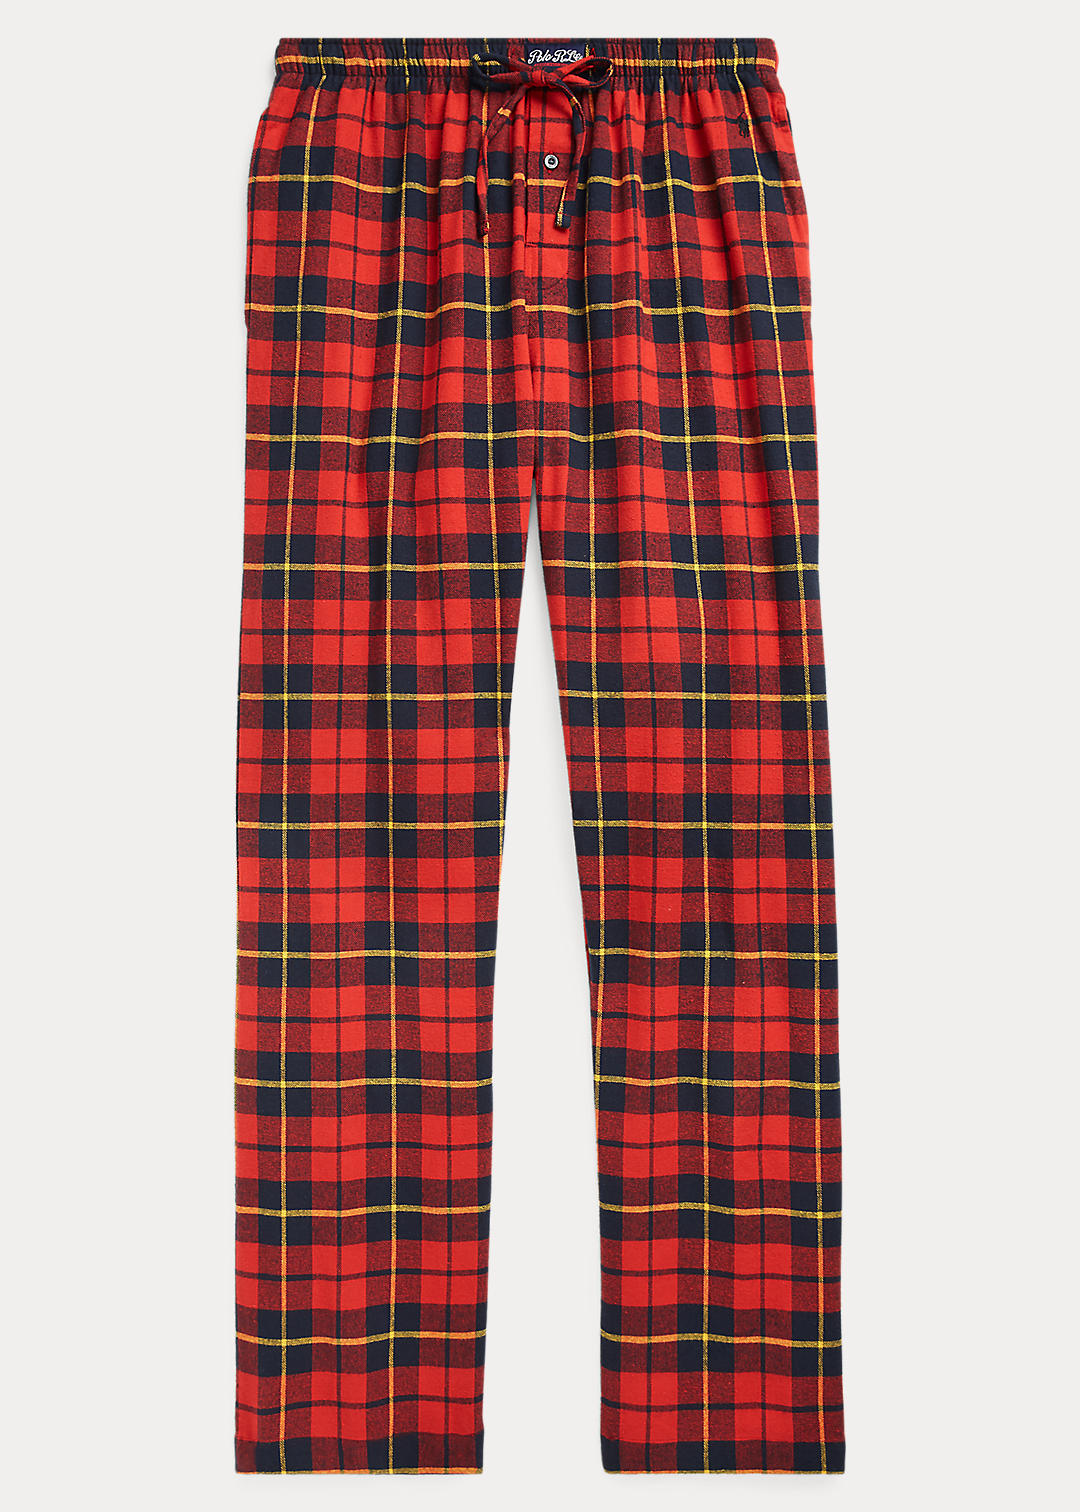 Scotch Plaid Flannel Pajama Pants Dillard's, 54% OFF